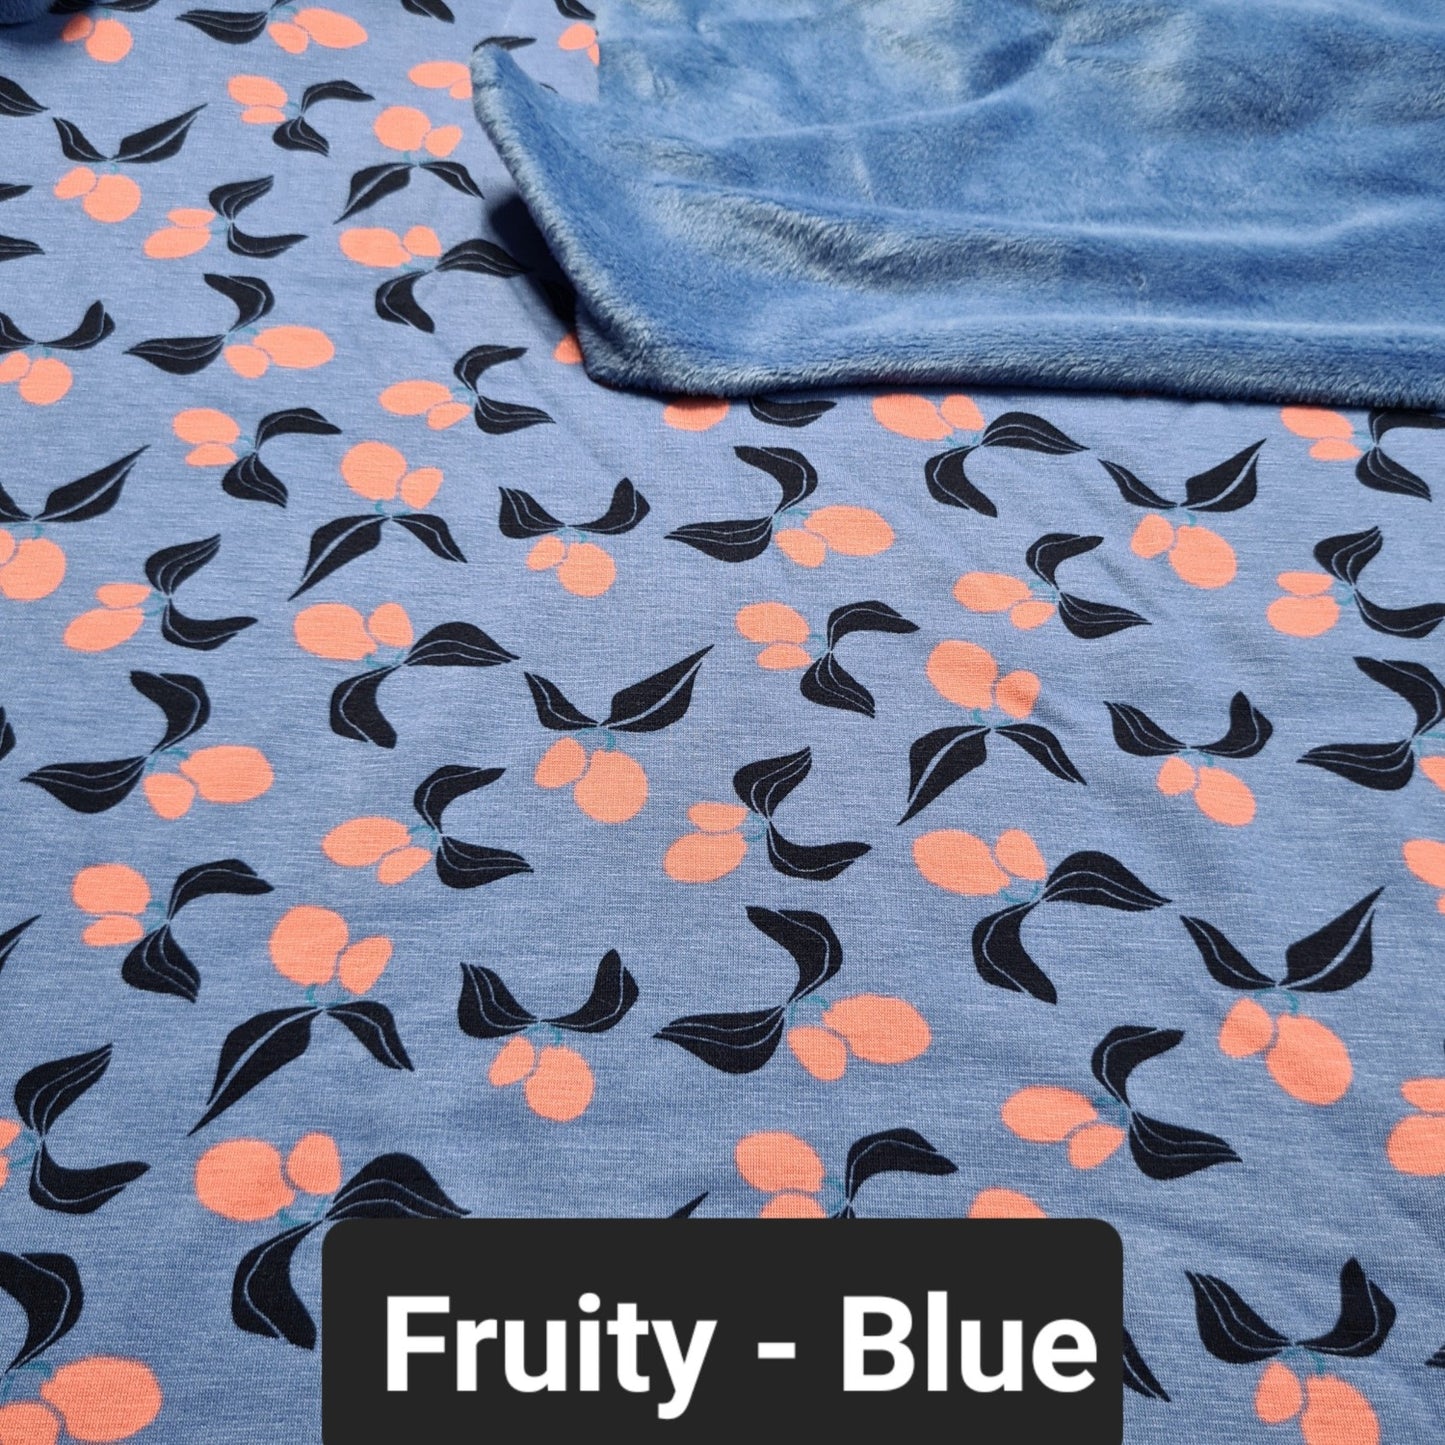 Light blue fleece fabric with orange fruits